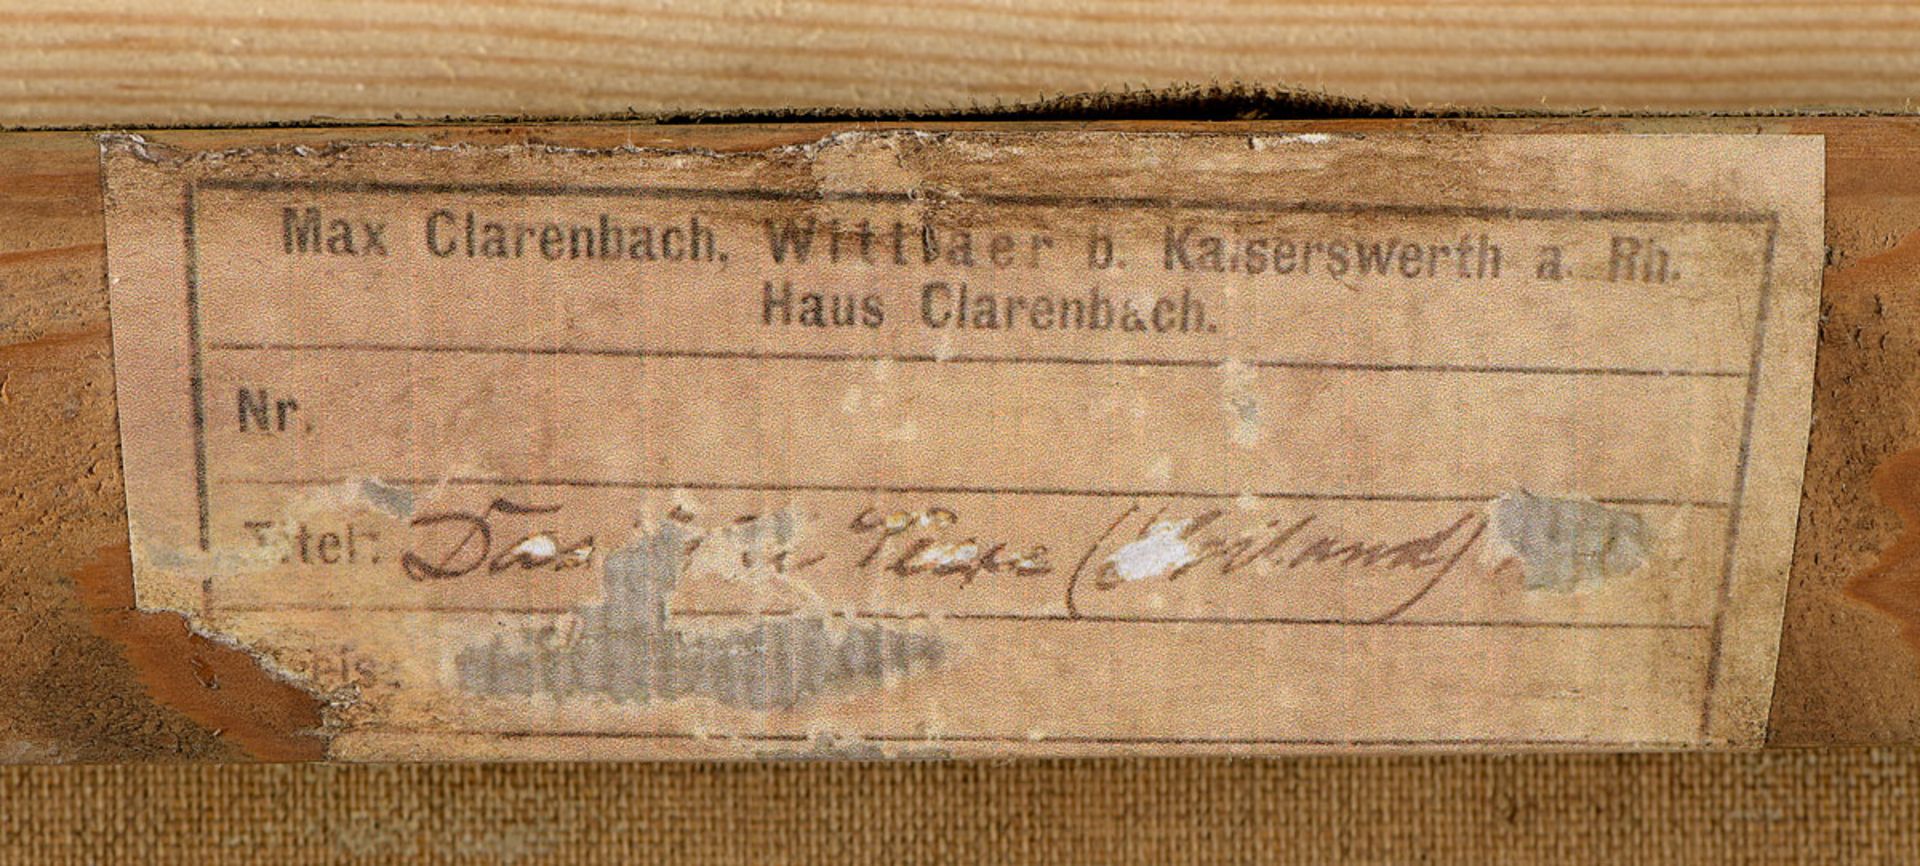 Clarenbach, Max 1880 Neuss - 1952 Düsseldorf - Image 3 of 3